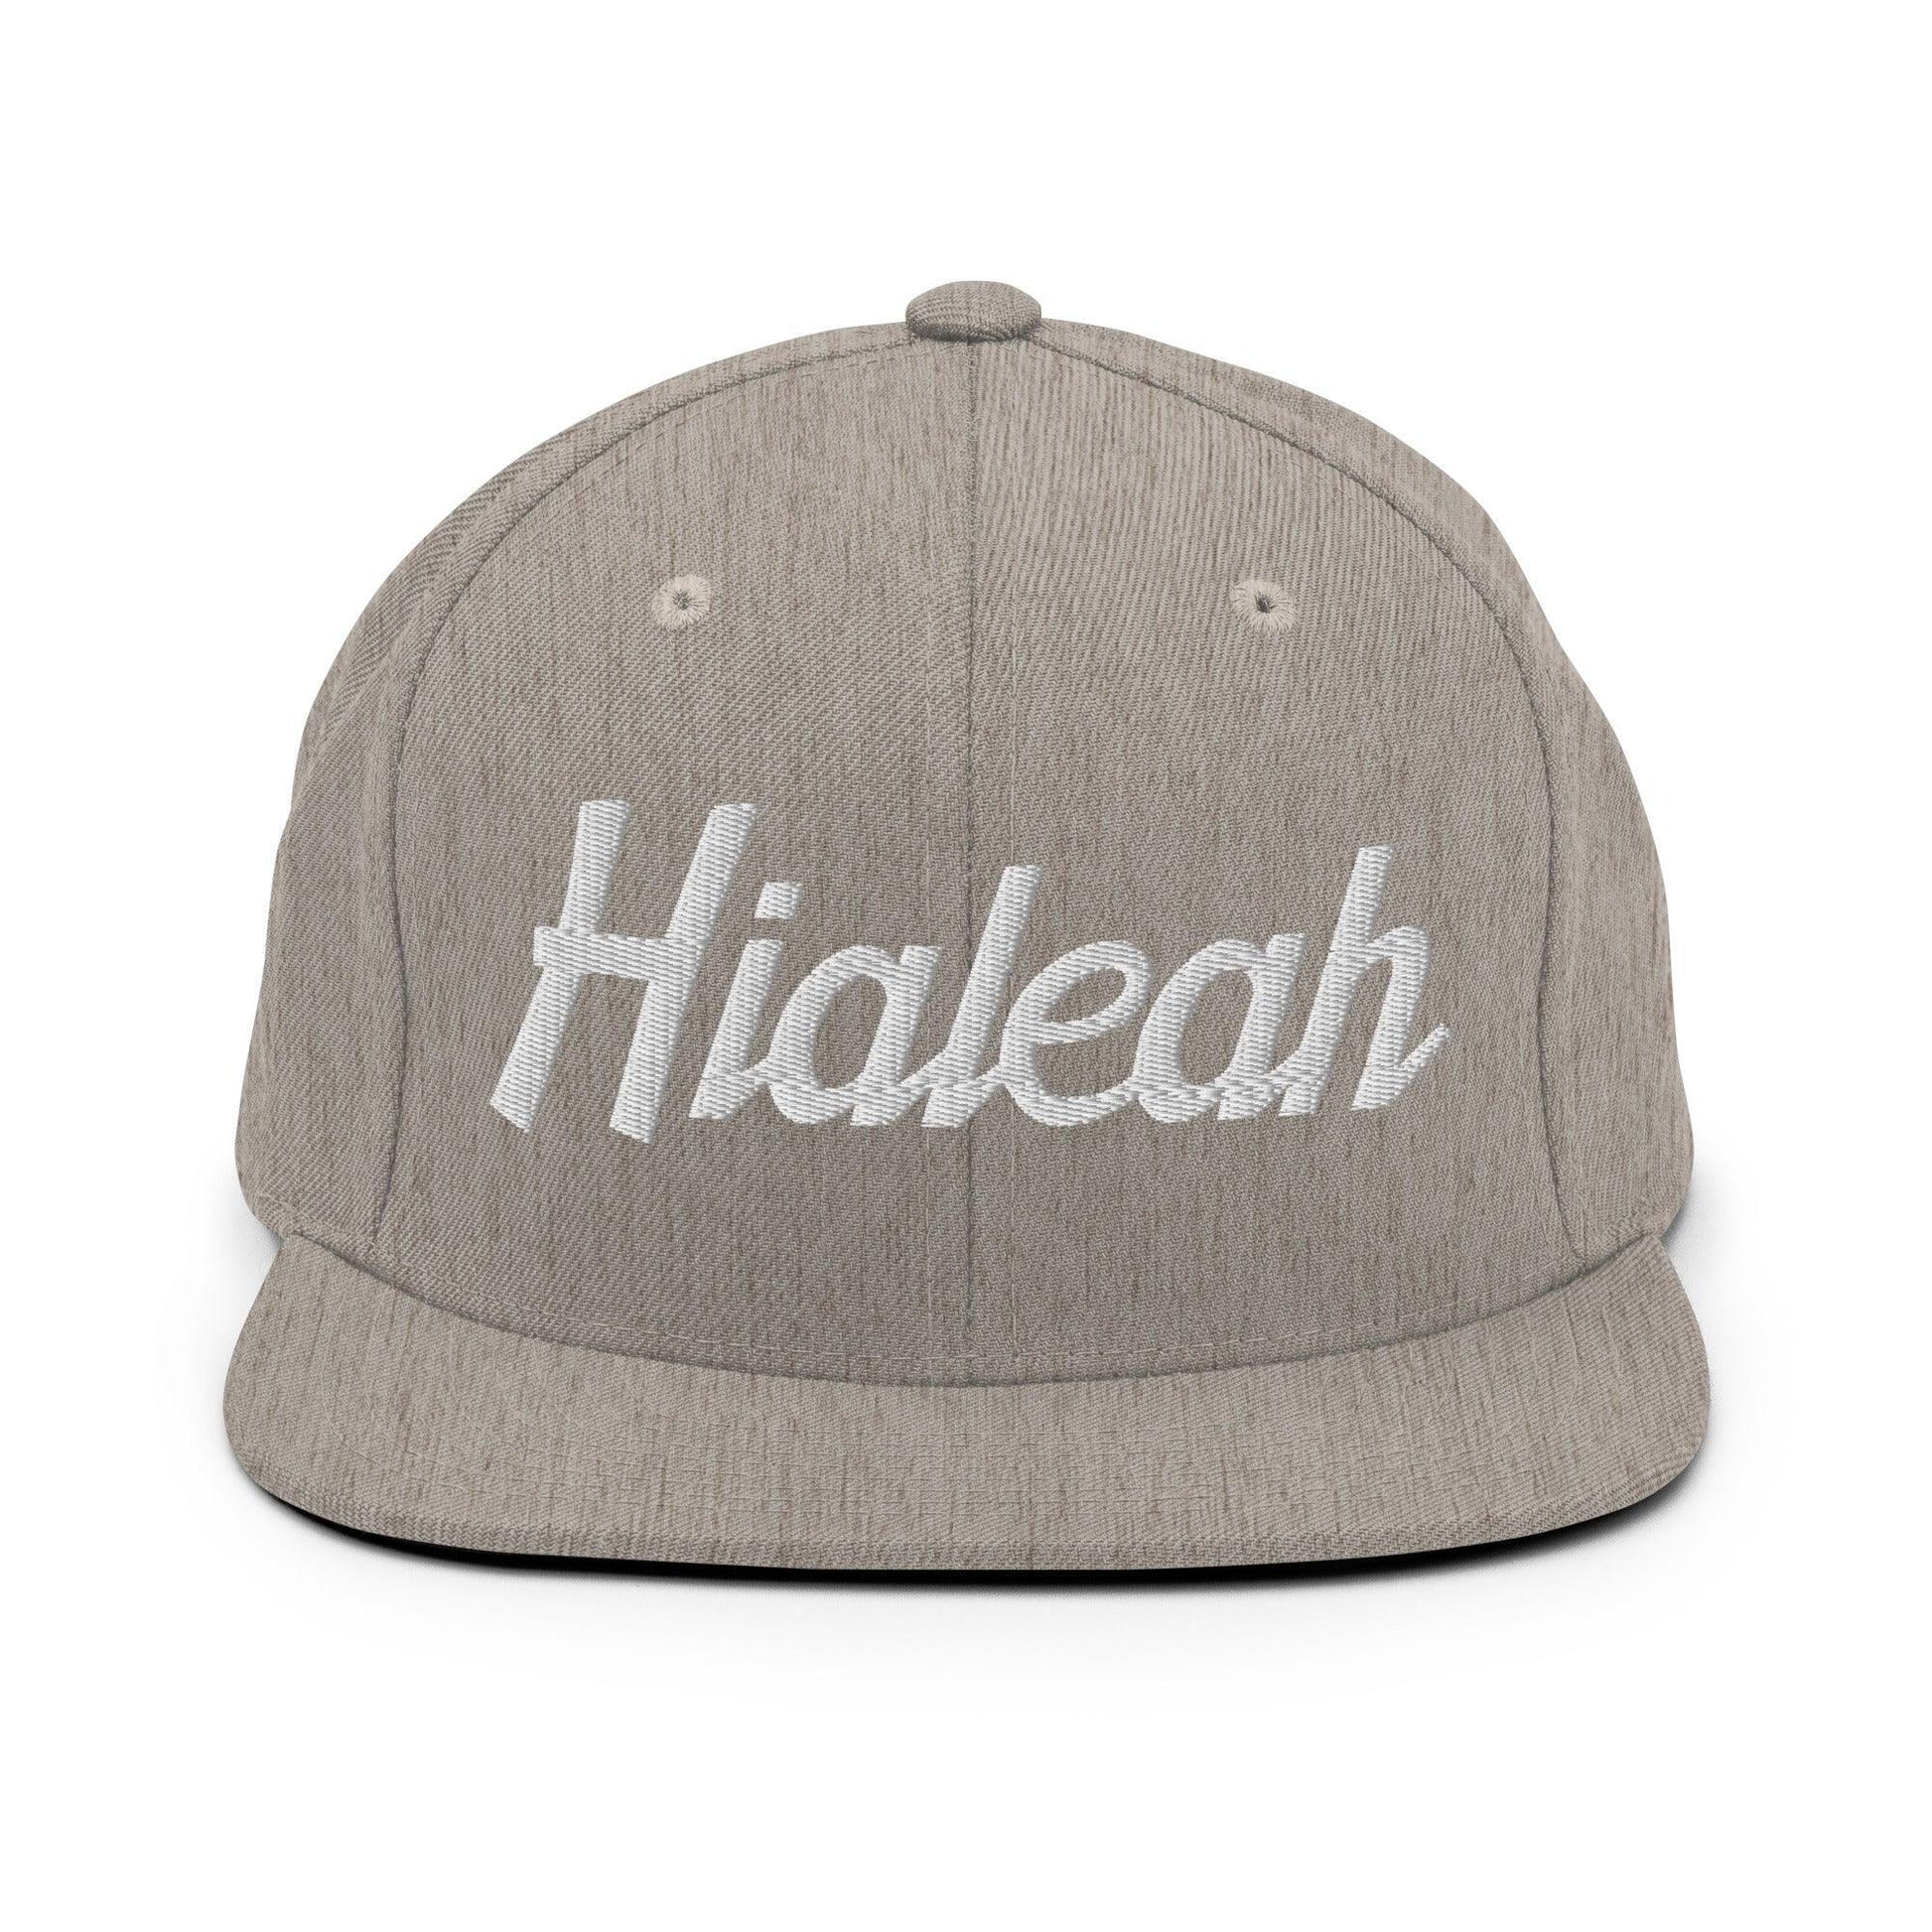 Hialeah Script Snapback Hat Heather Grey